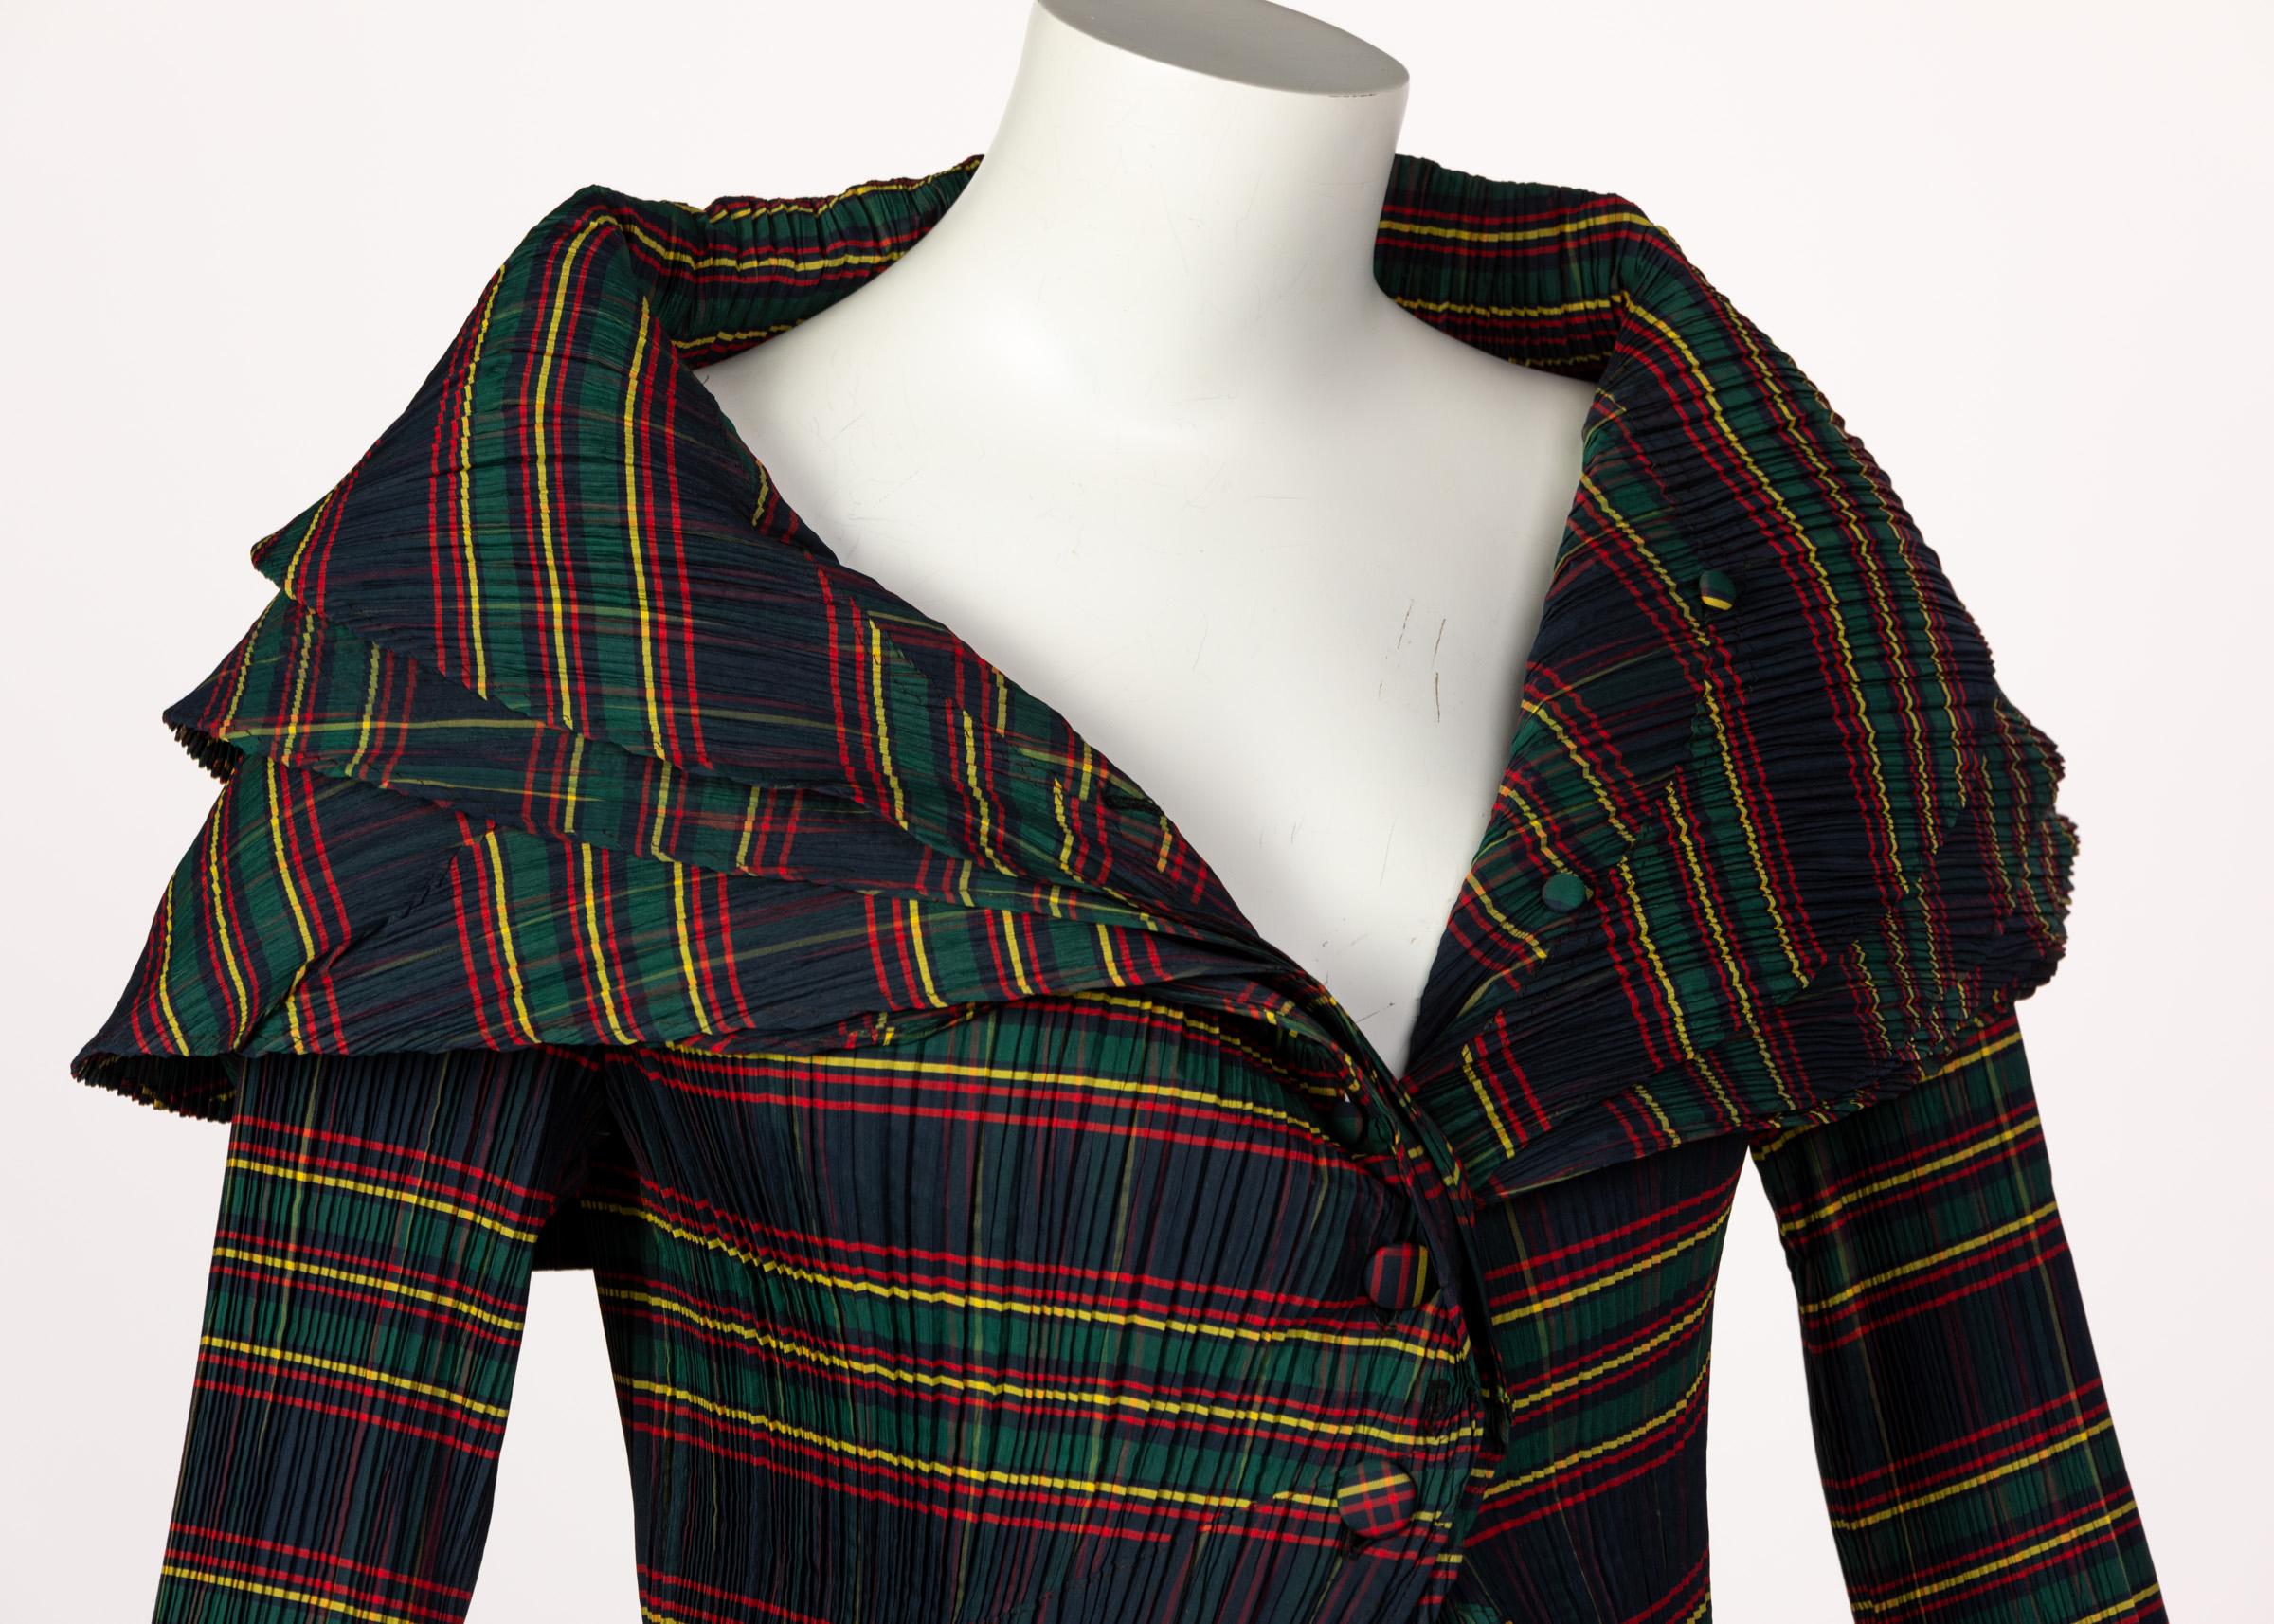 Mashiah Plisse Tartan Plaid Jacket Top Avant Garde In Excellent Condition For Sale In Boca Raton, FL